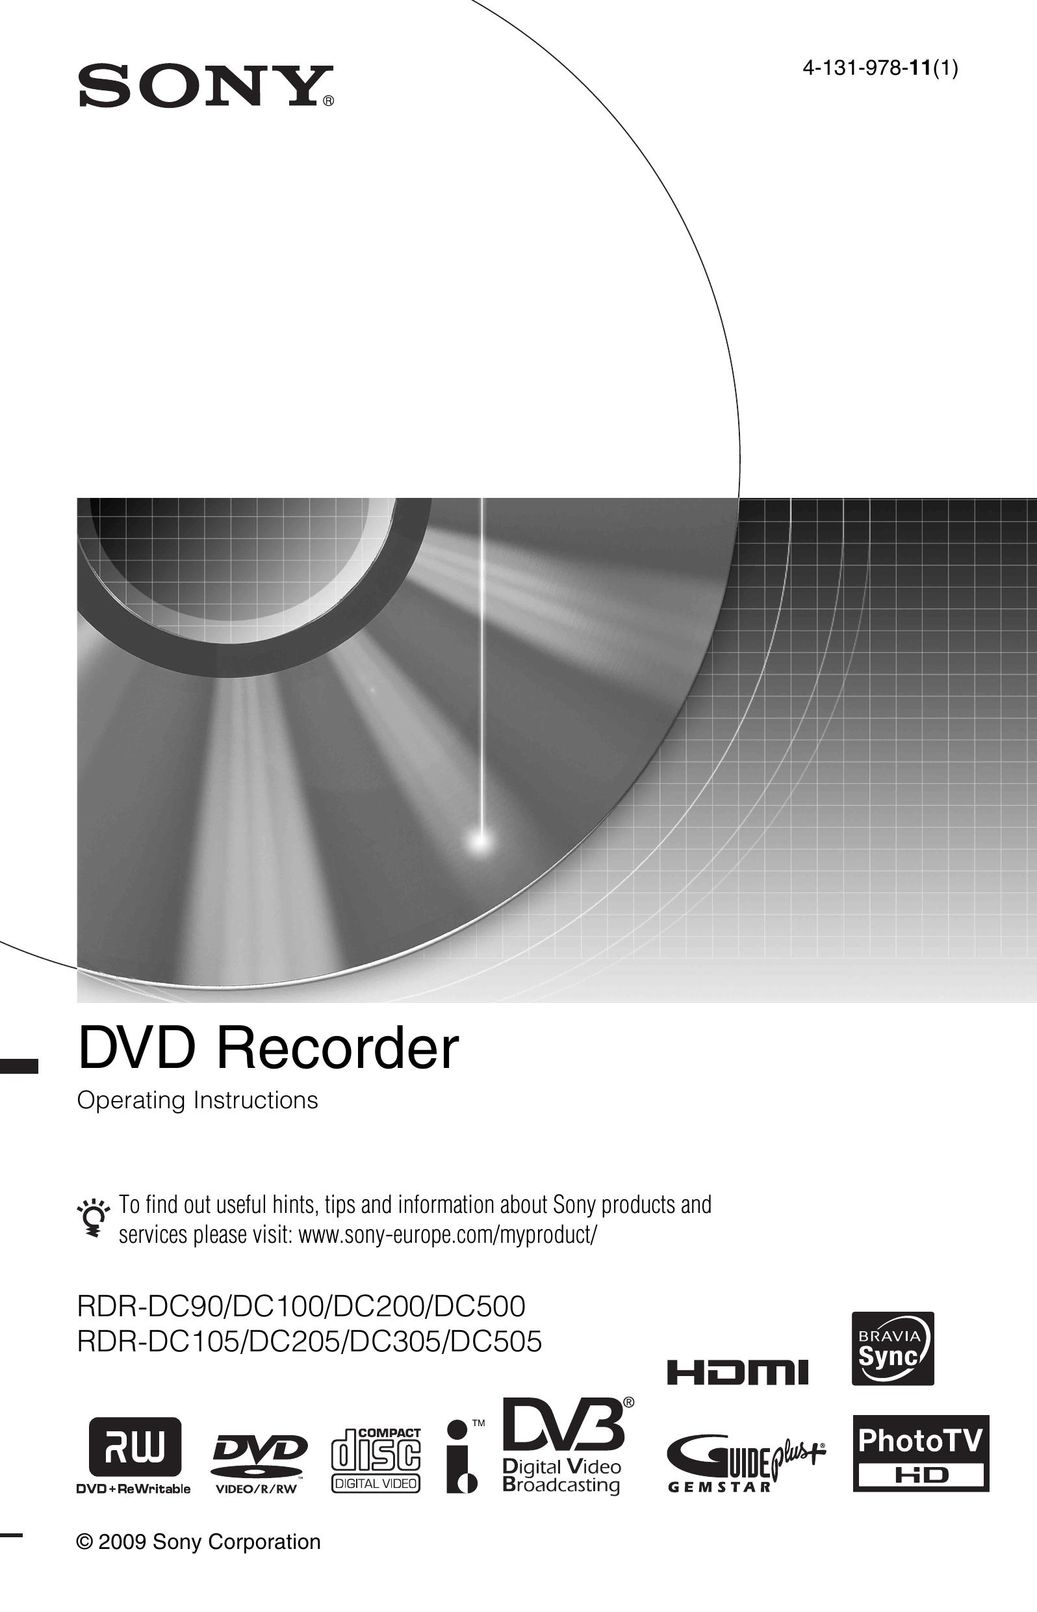 Sony RDR-DC500 DVD Recorder User Manual